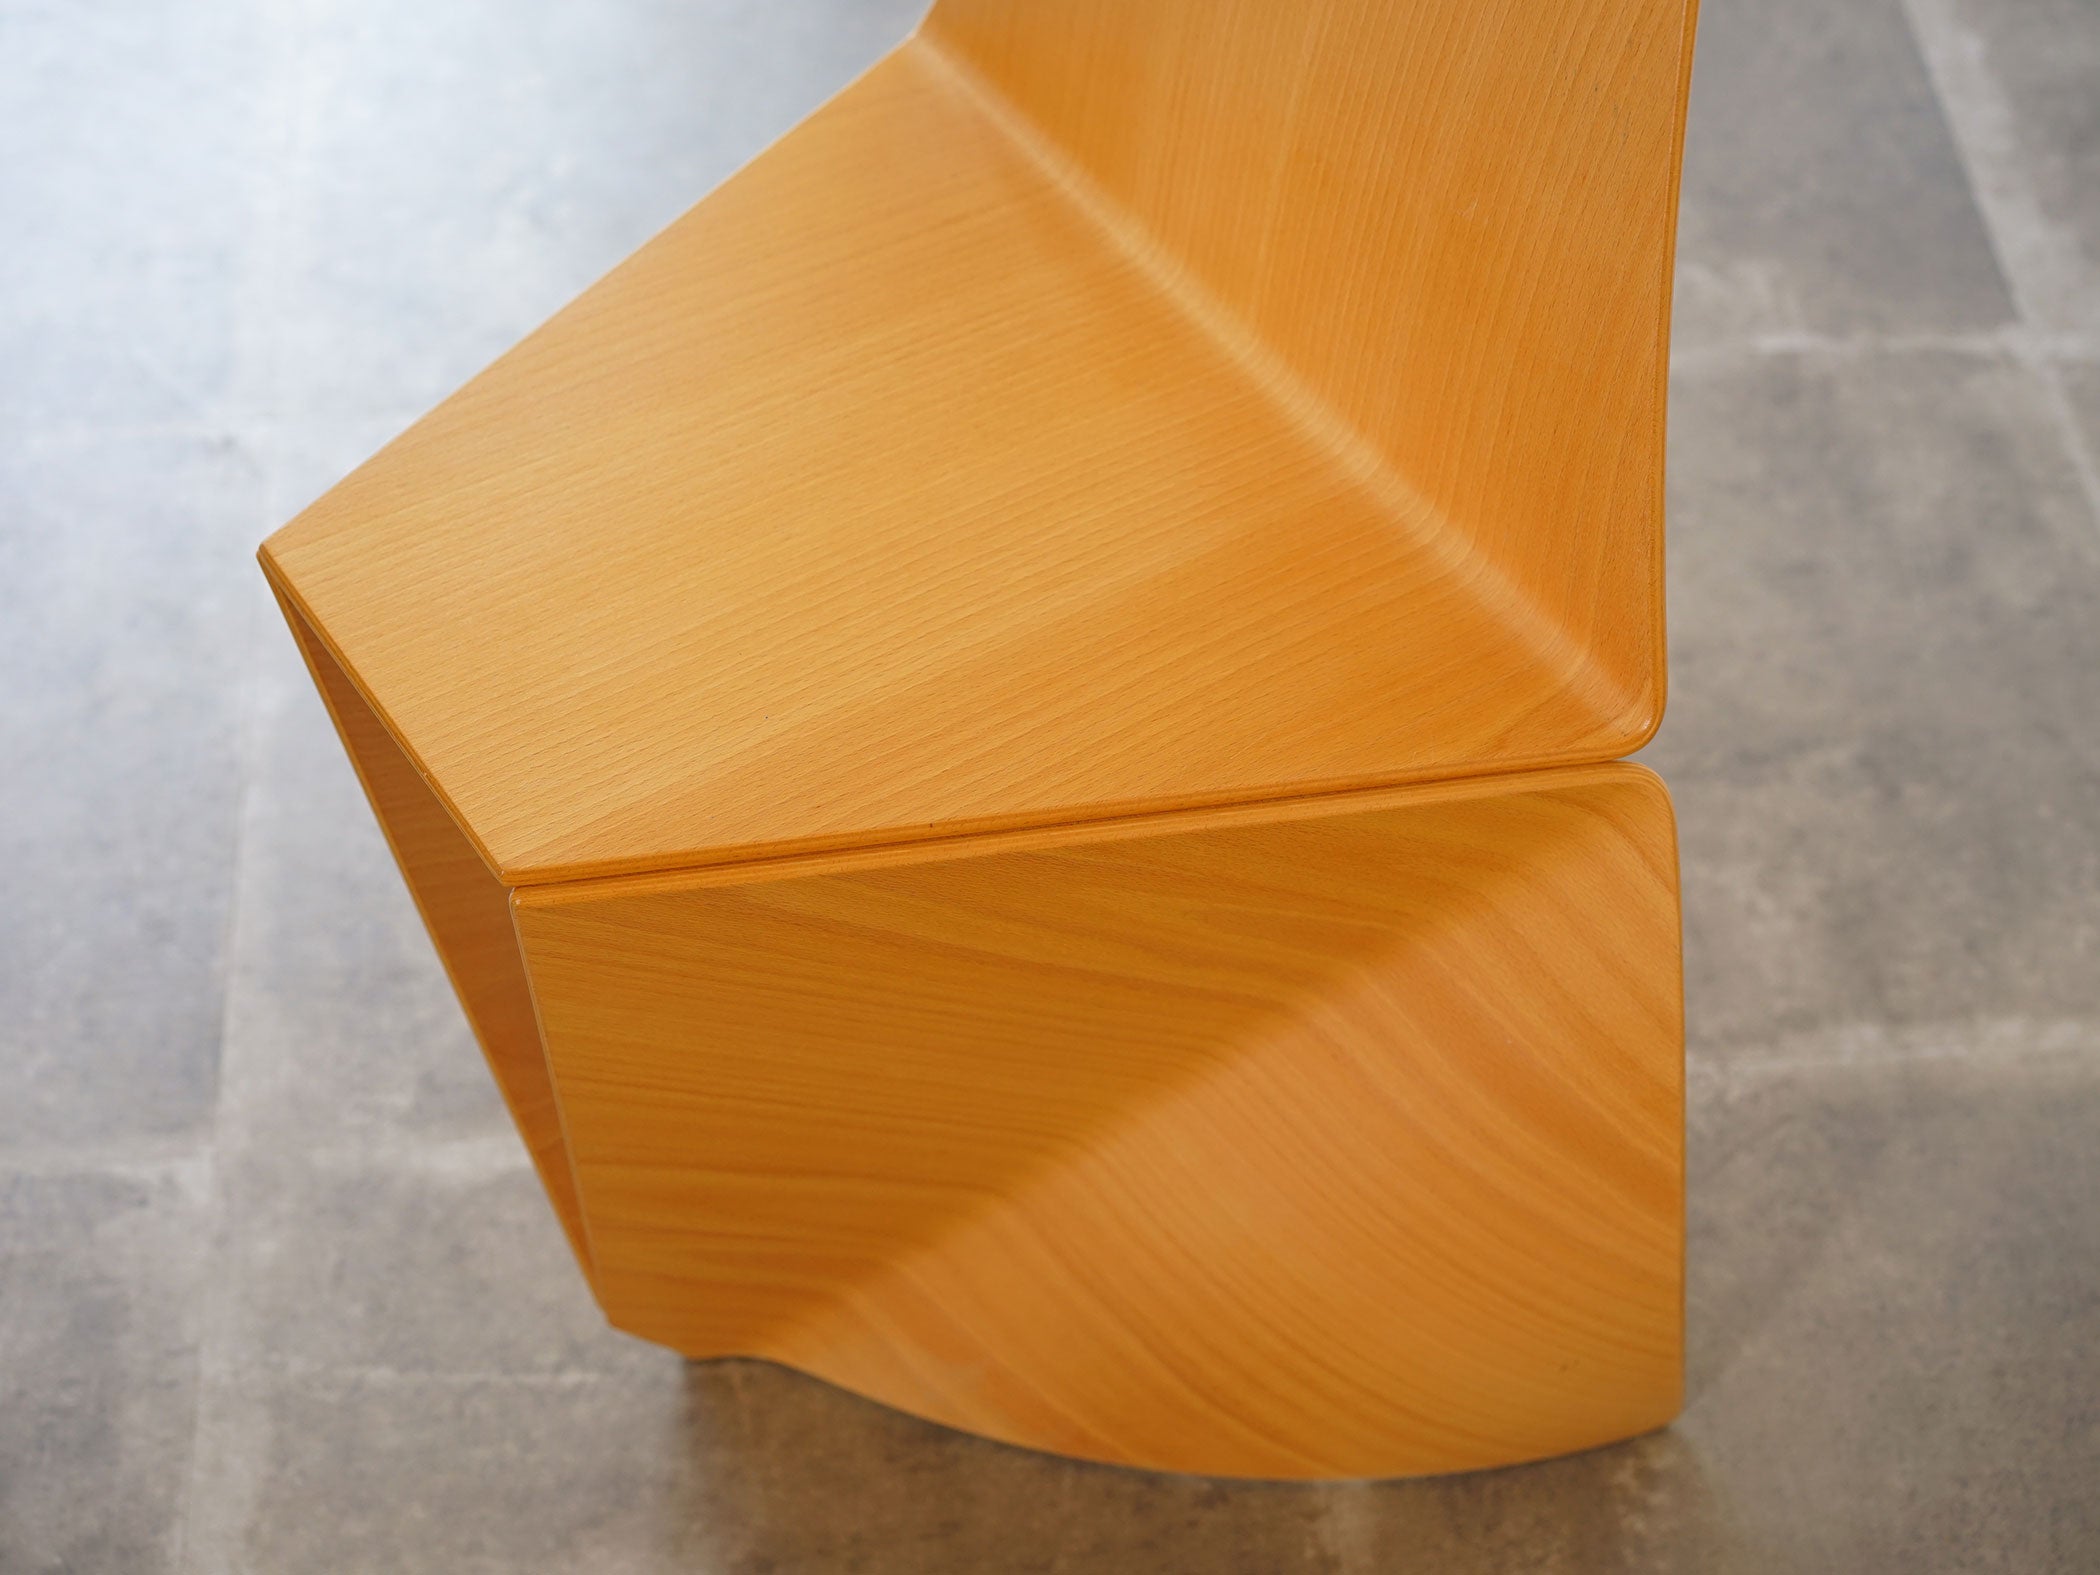 Peter Karpf Chair